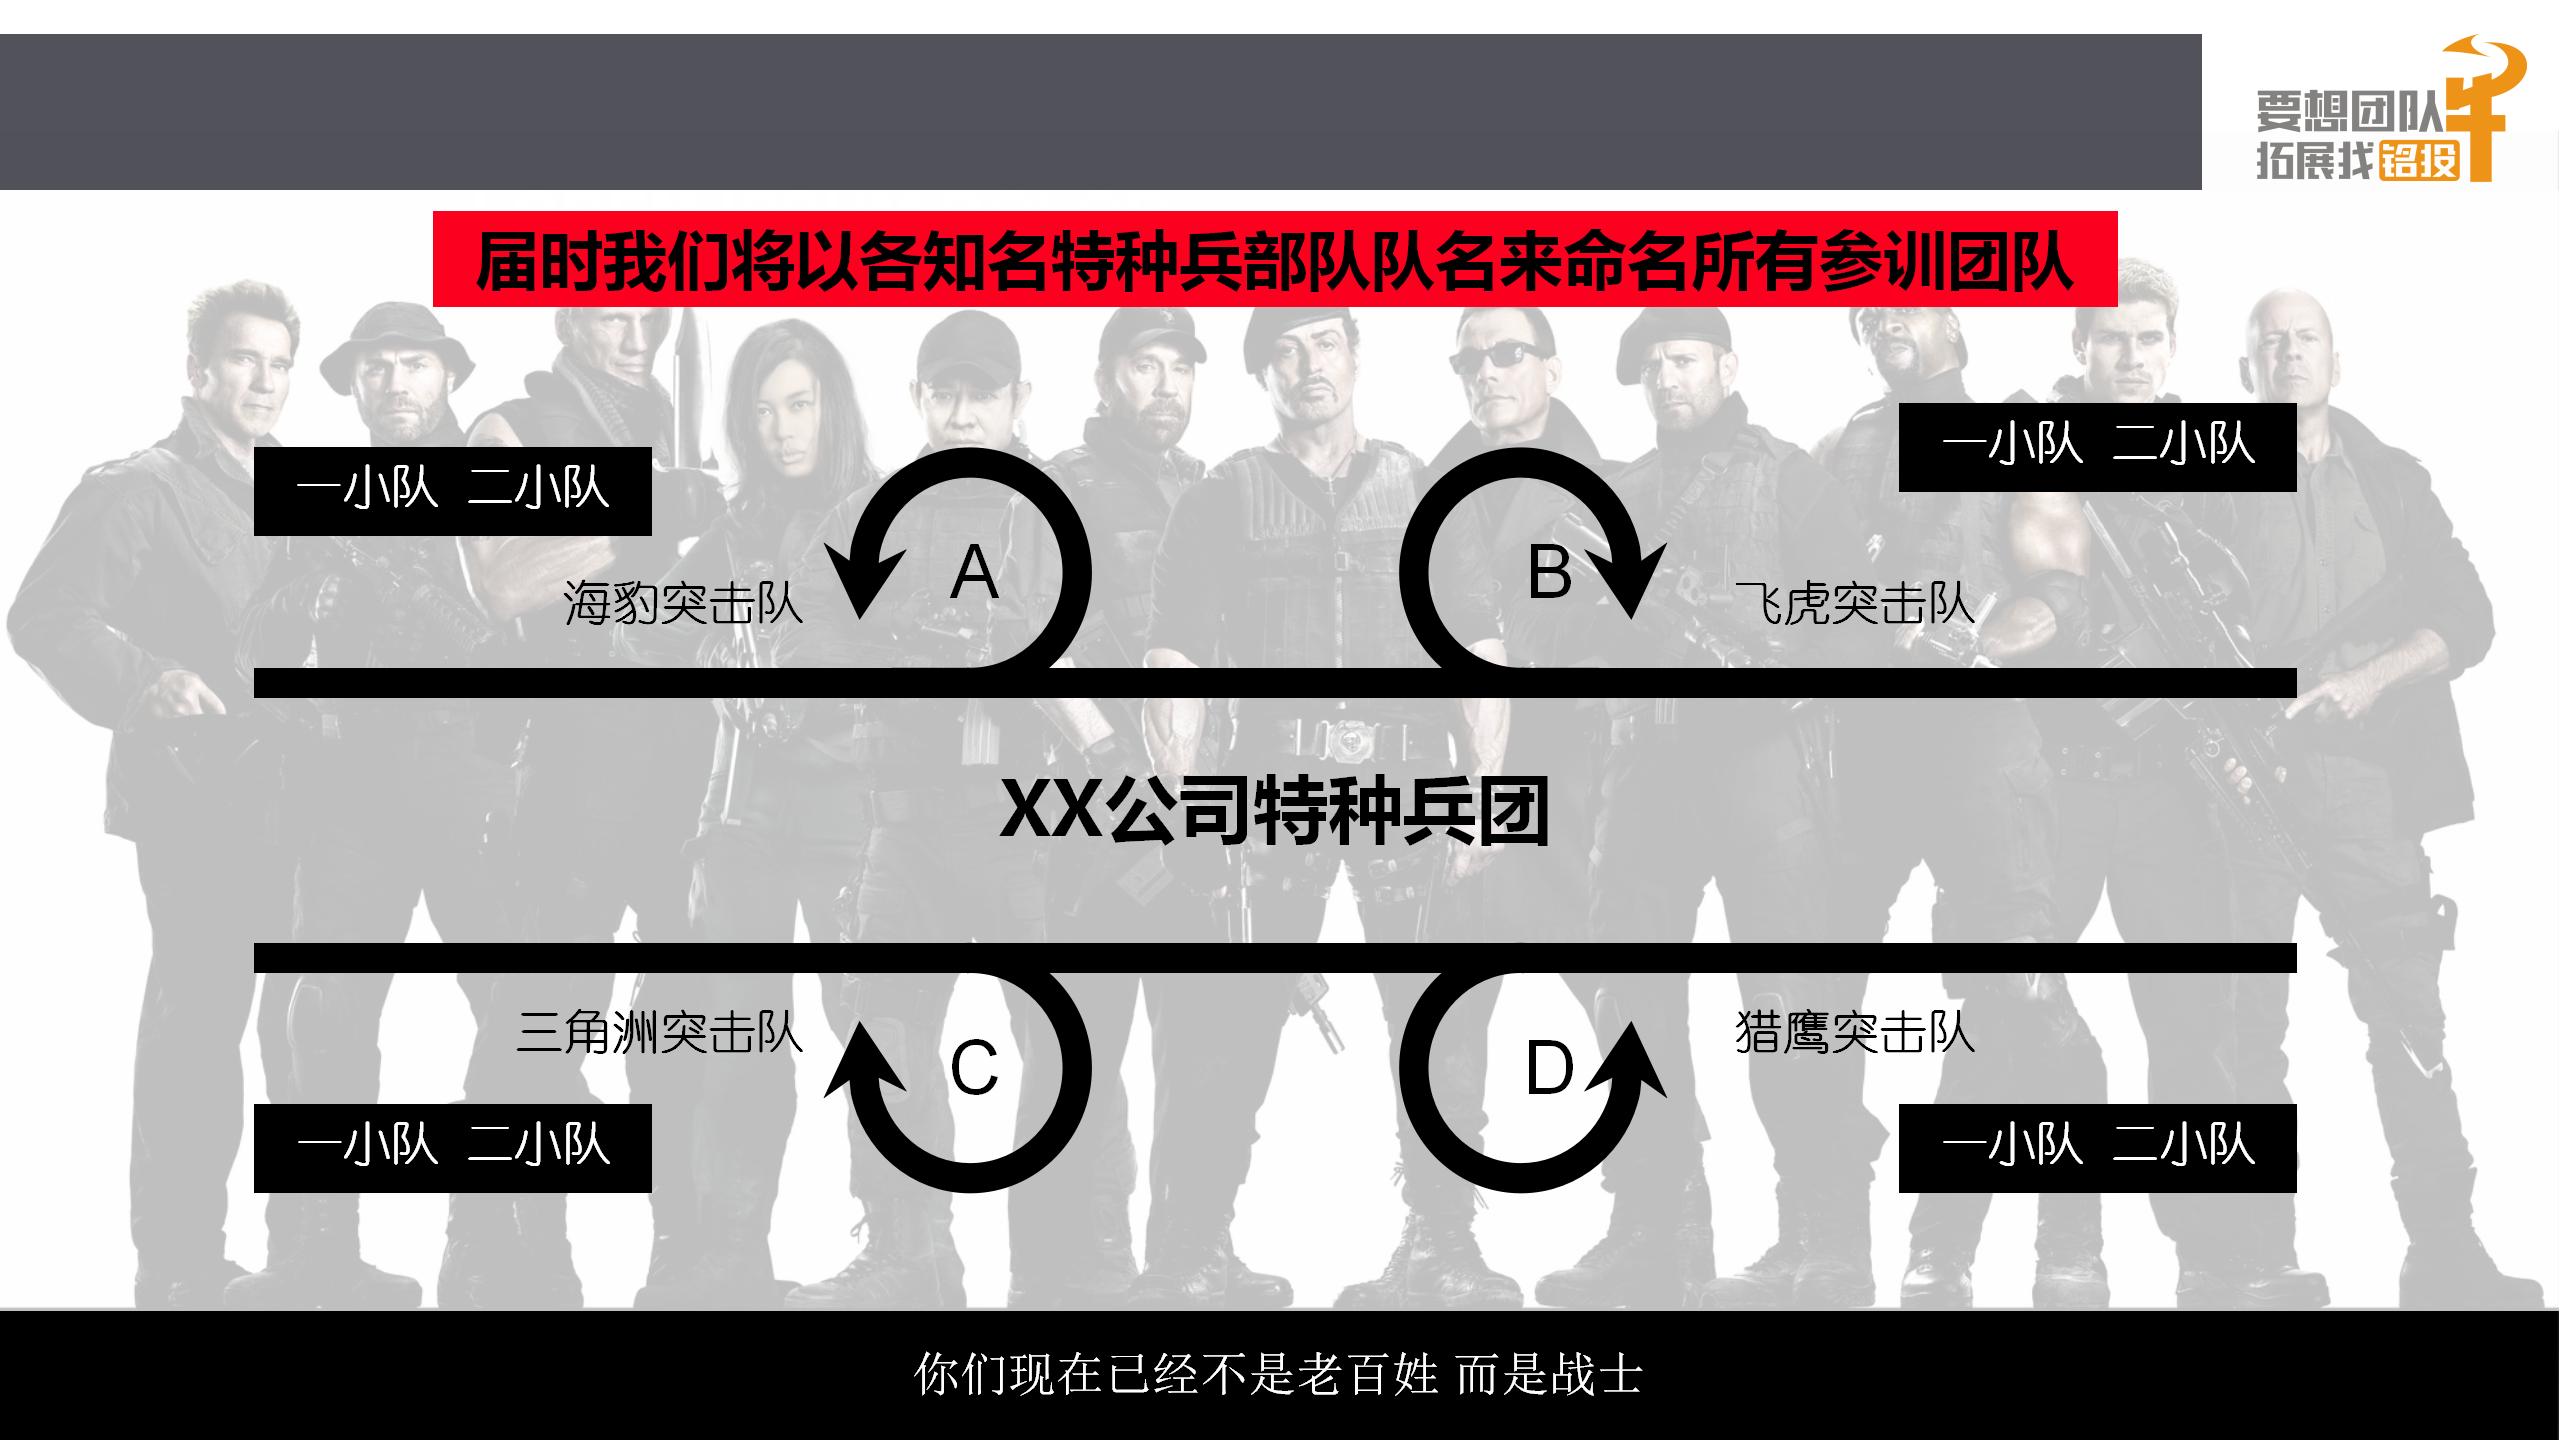 2020XX公司商业特种兵训练策划案 (2)_04.jpg